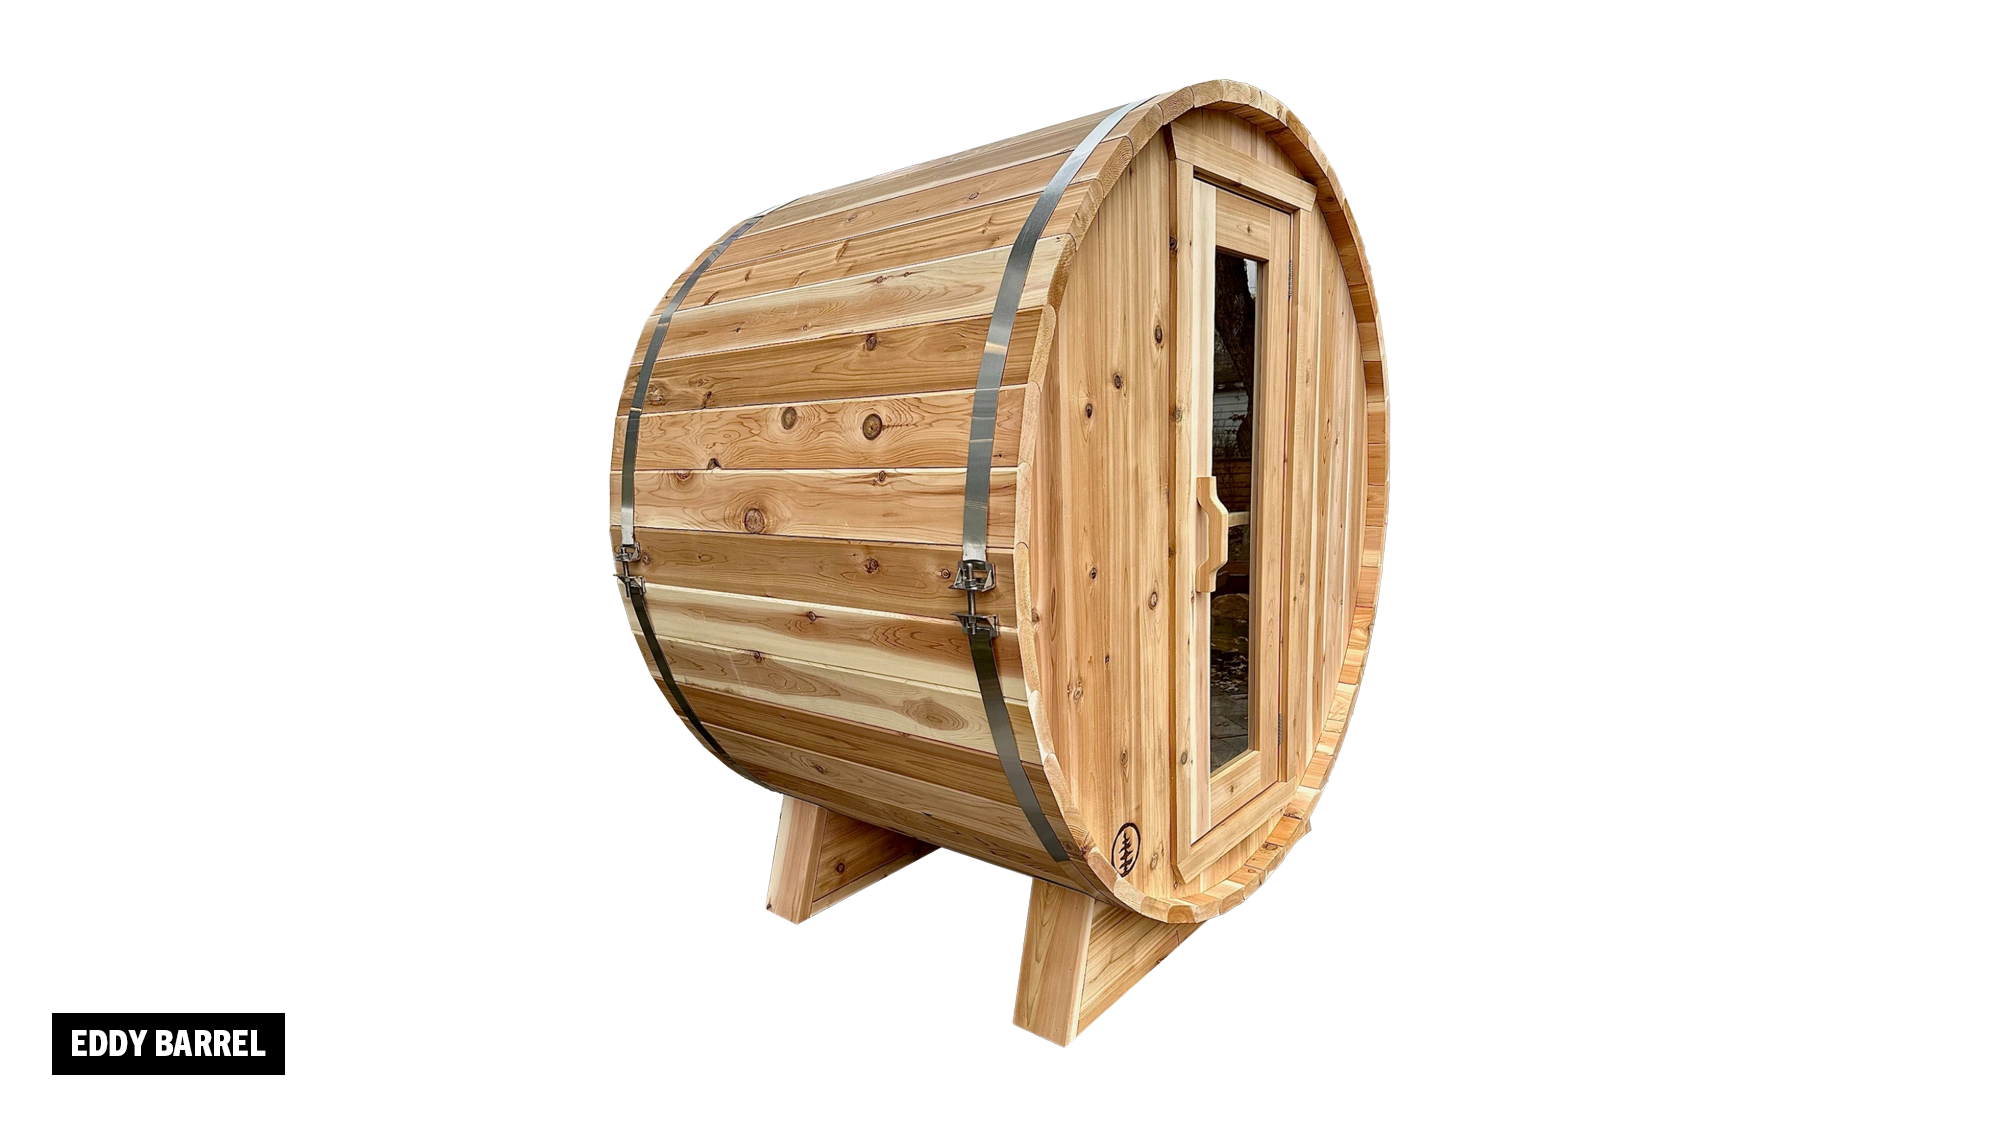 SISU Barrel Sauna